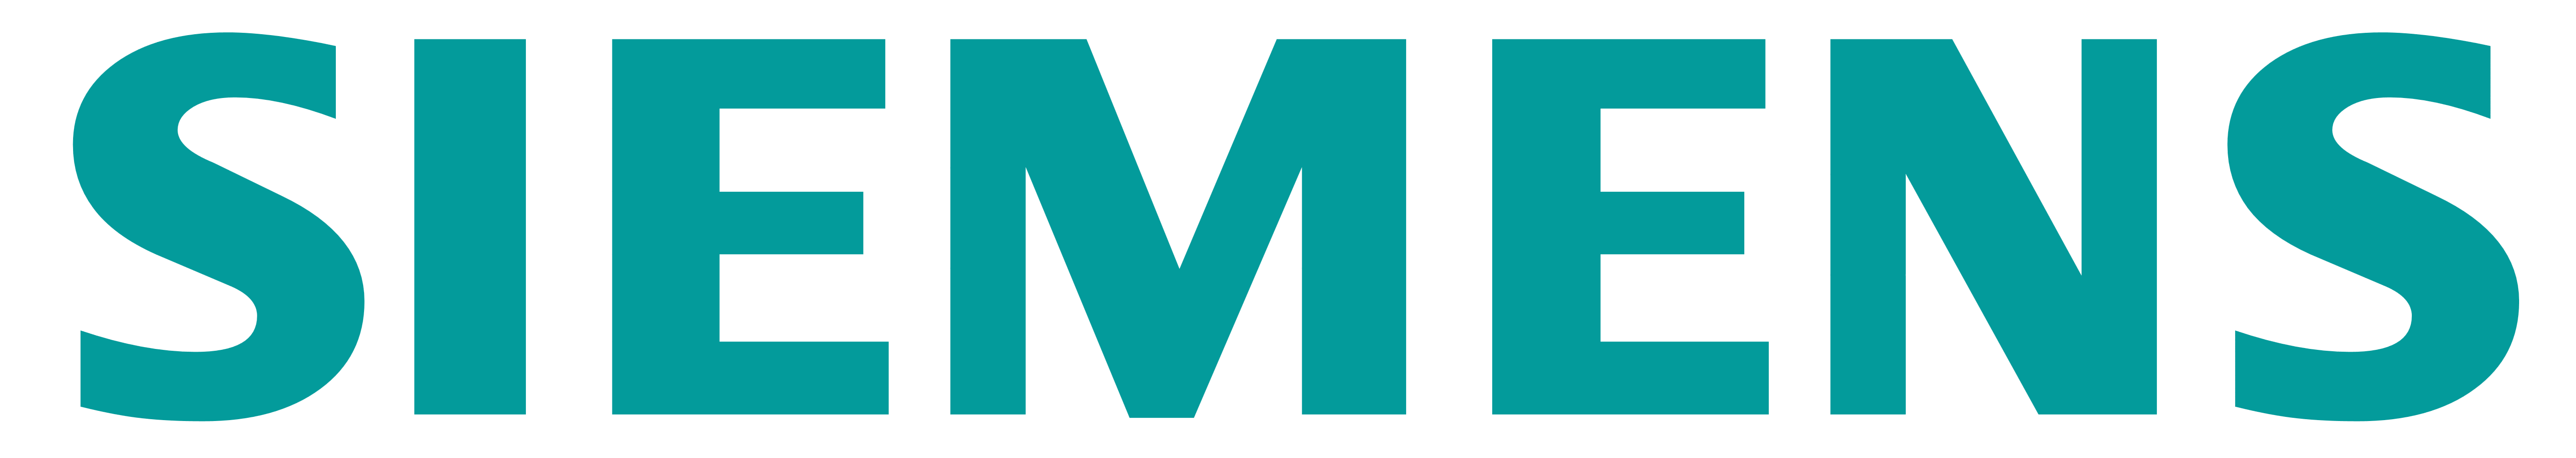 Siemens Logo 